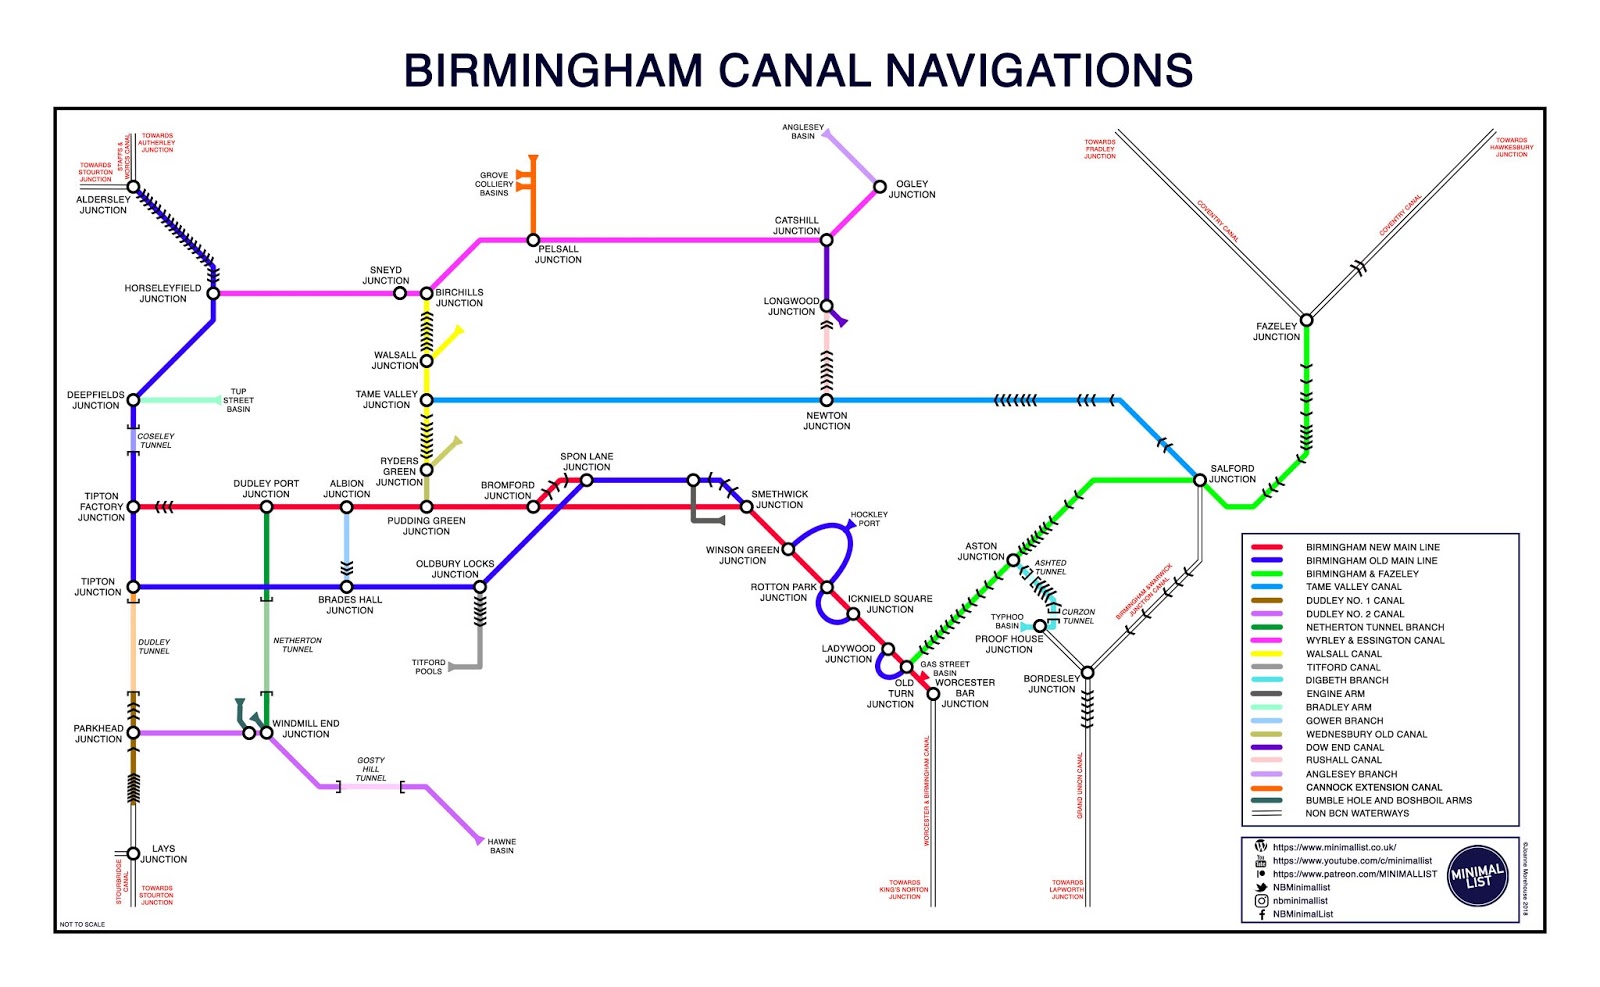 MINIMAL LIST: Birmingham Canal Navigation Map